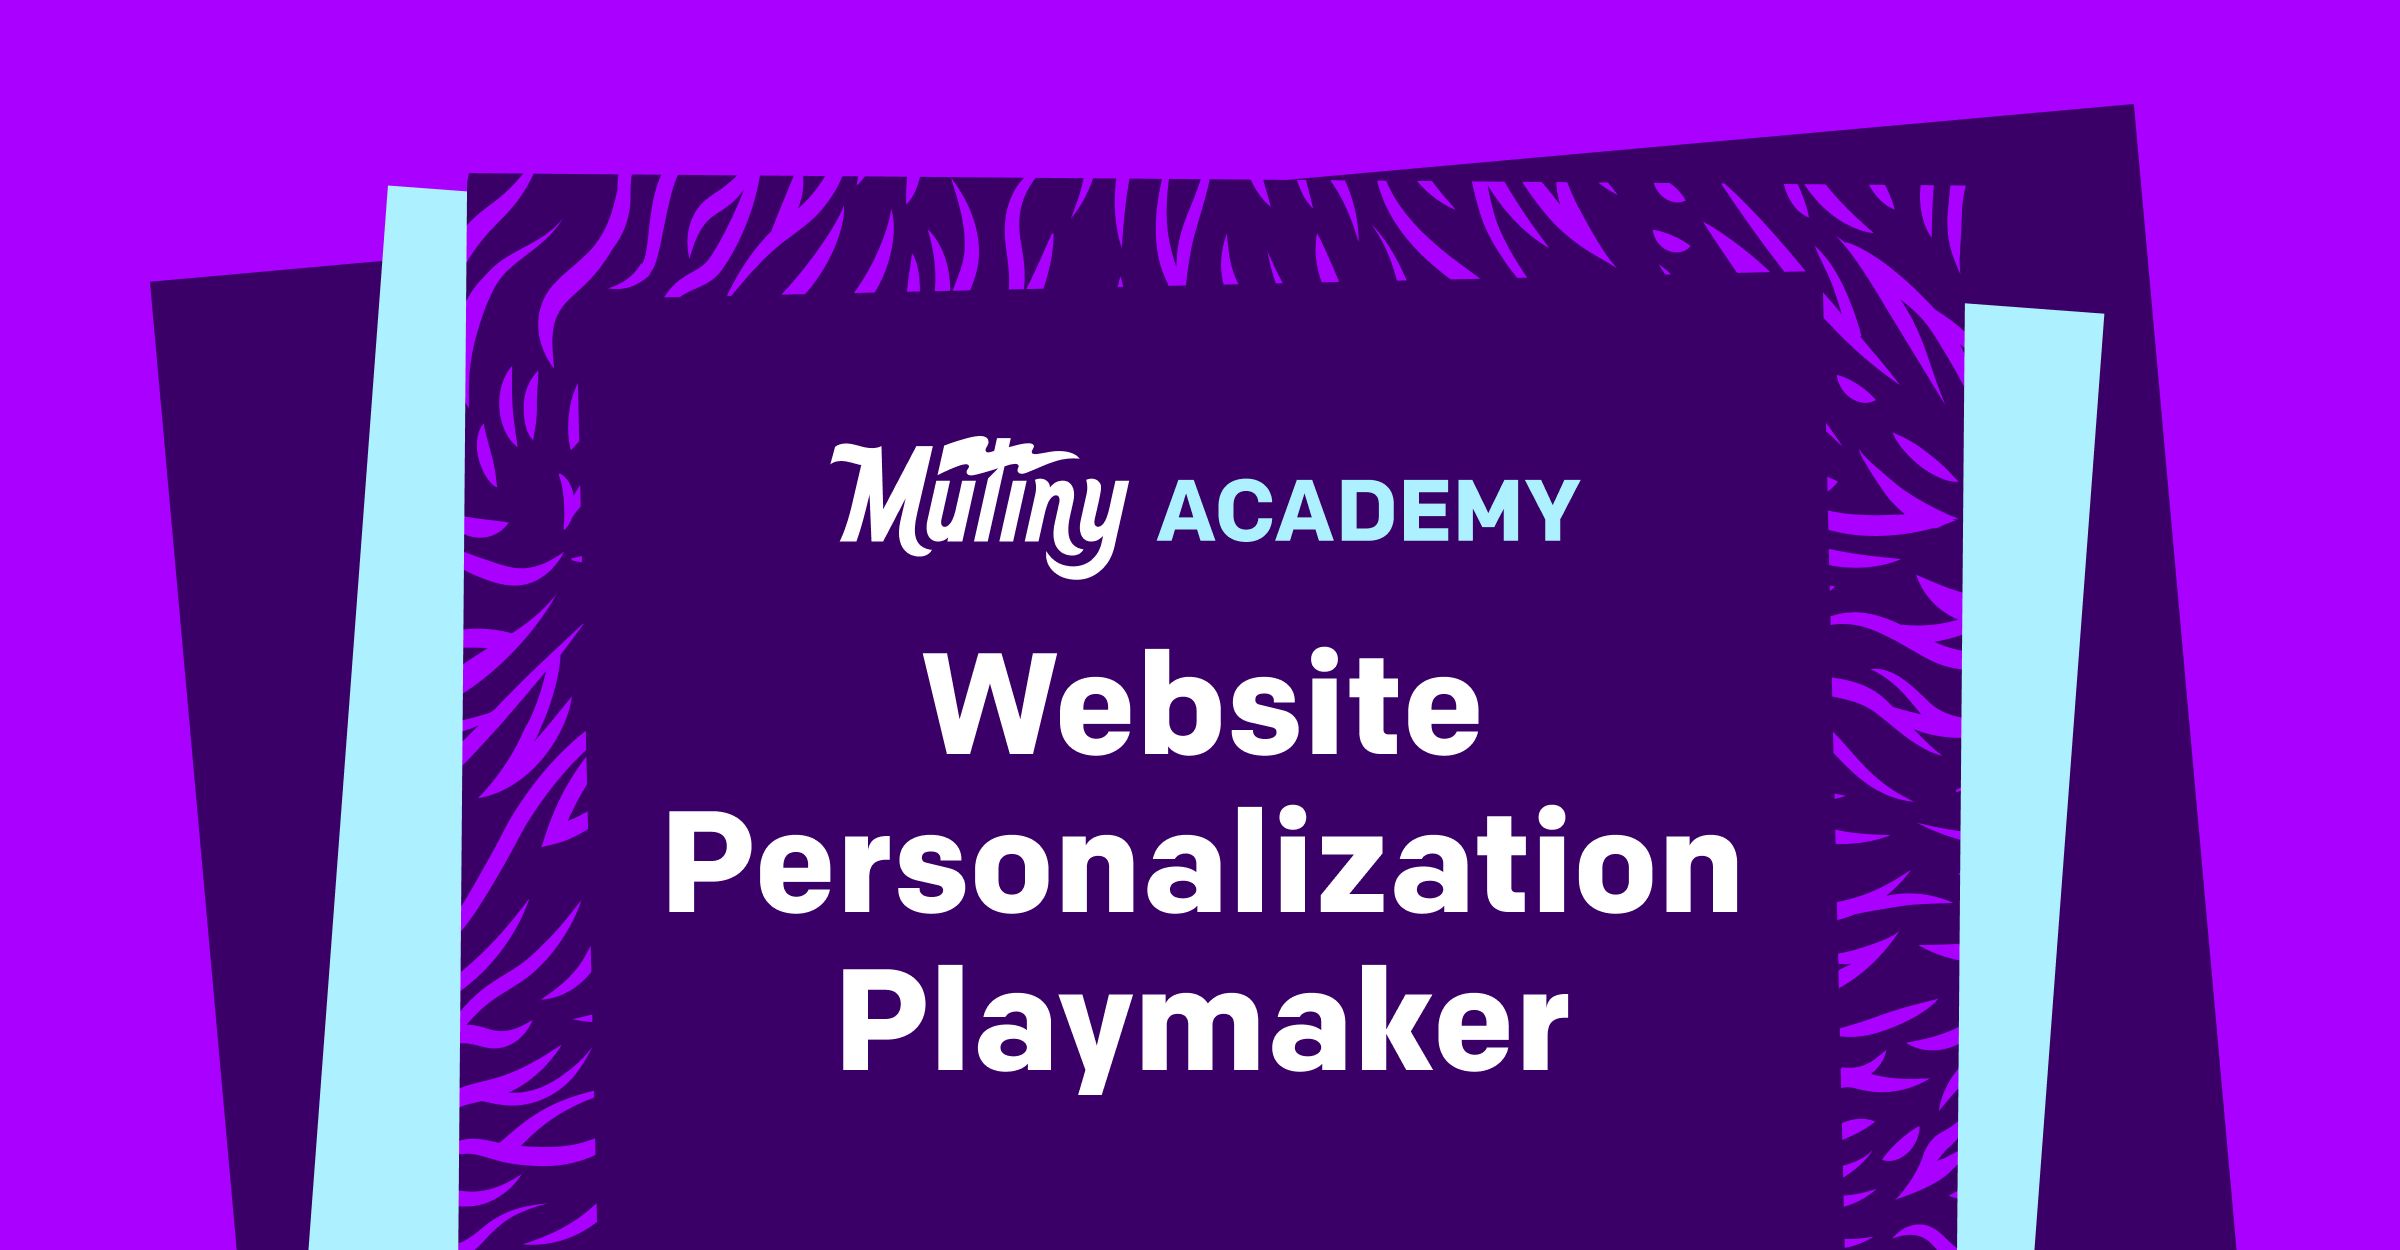 Website personalization playmaker